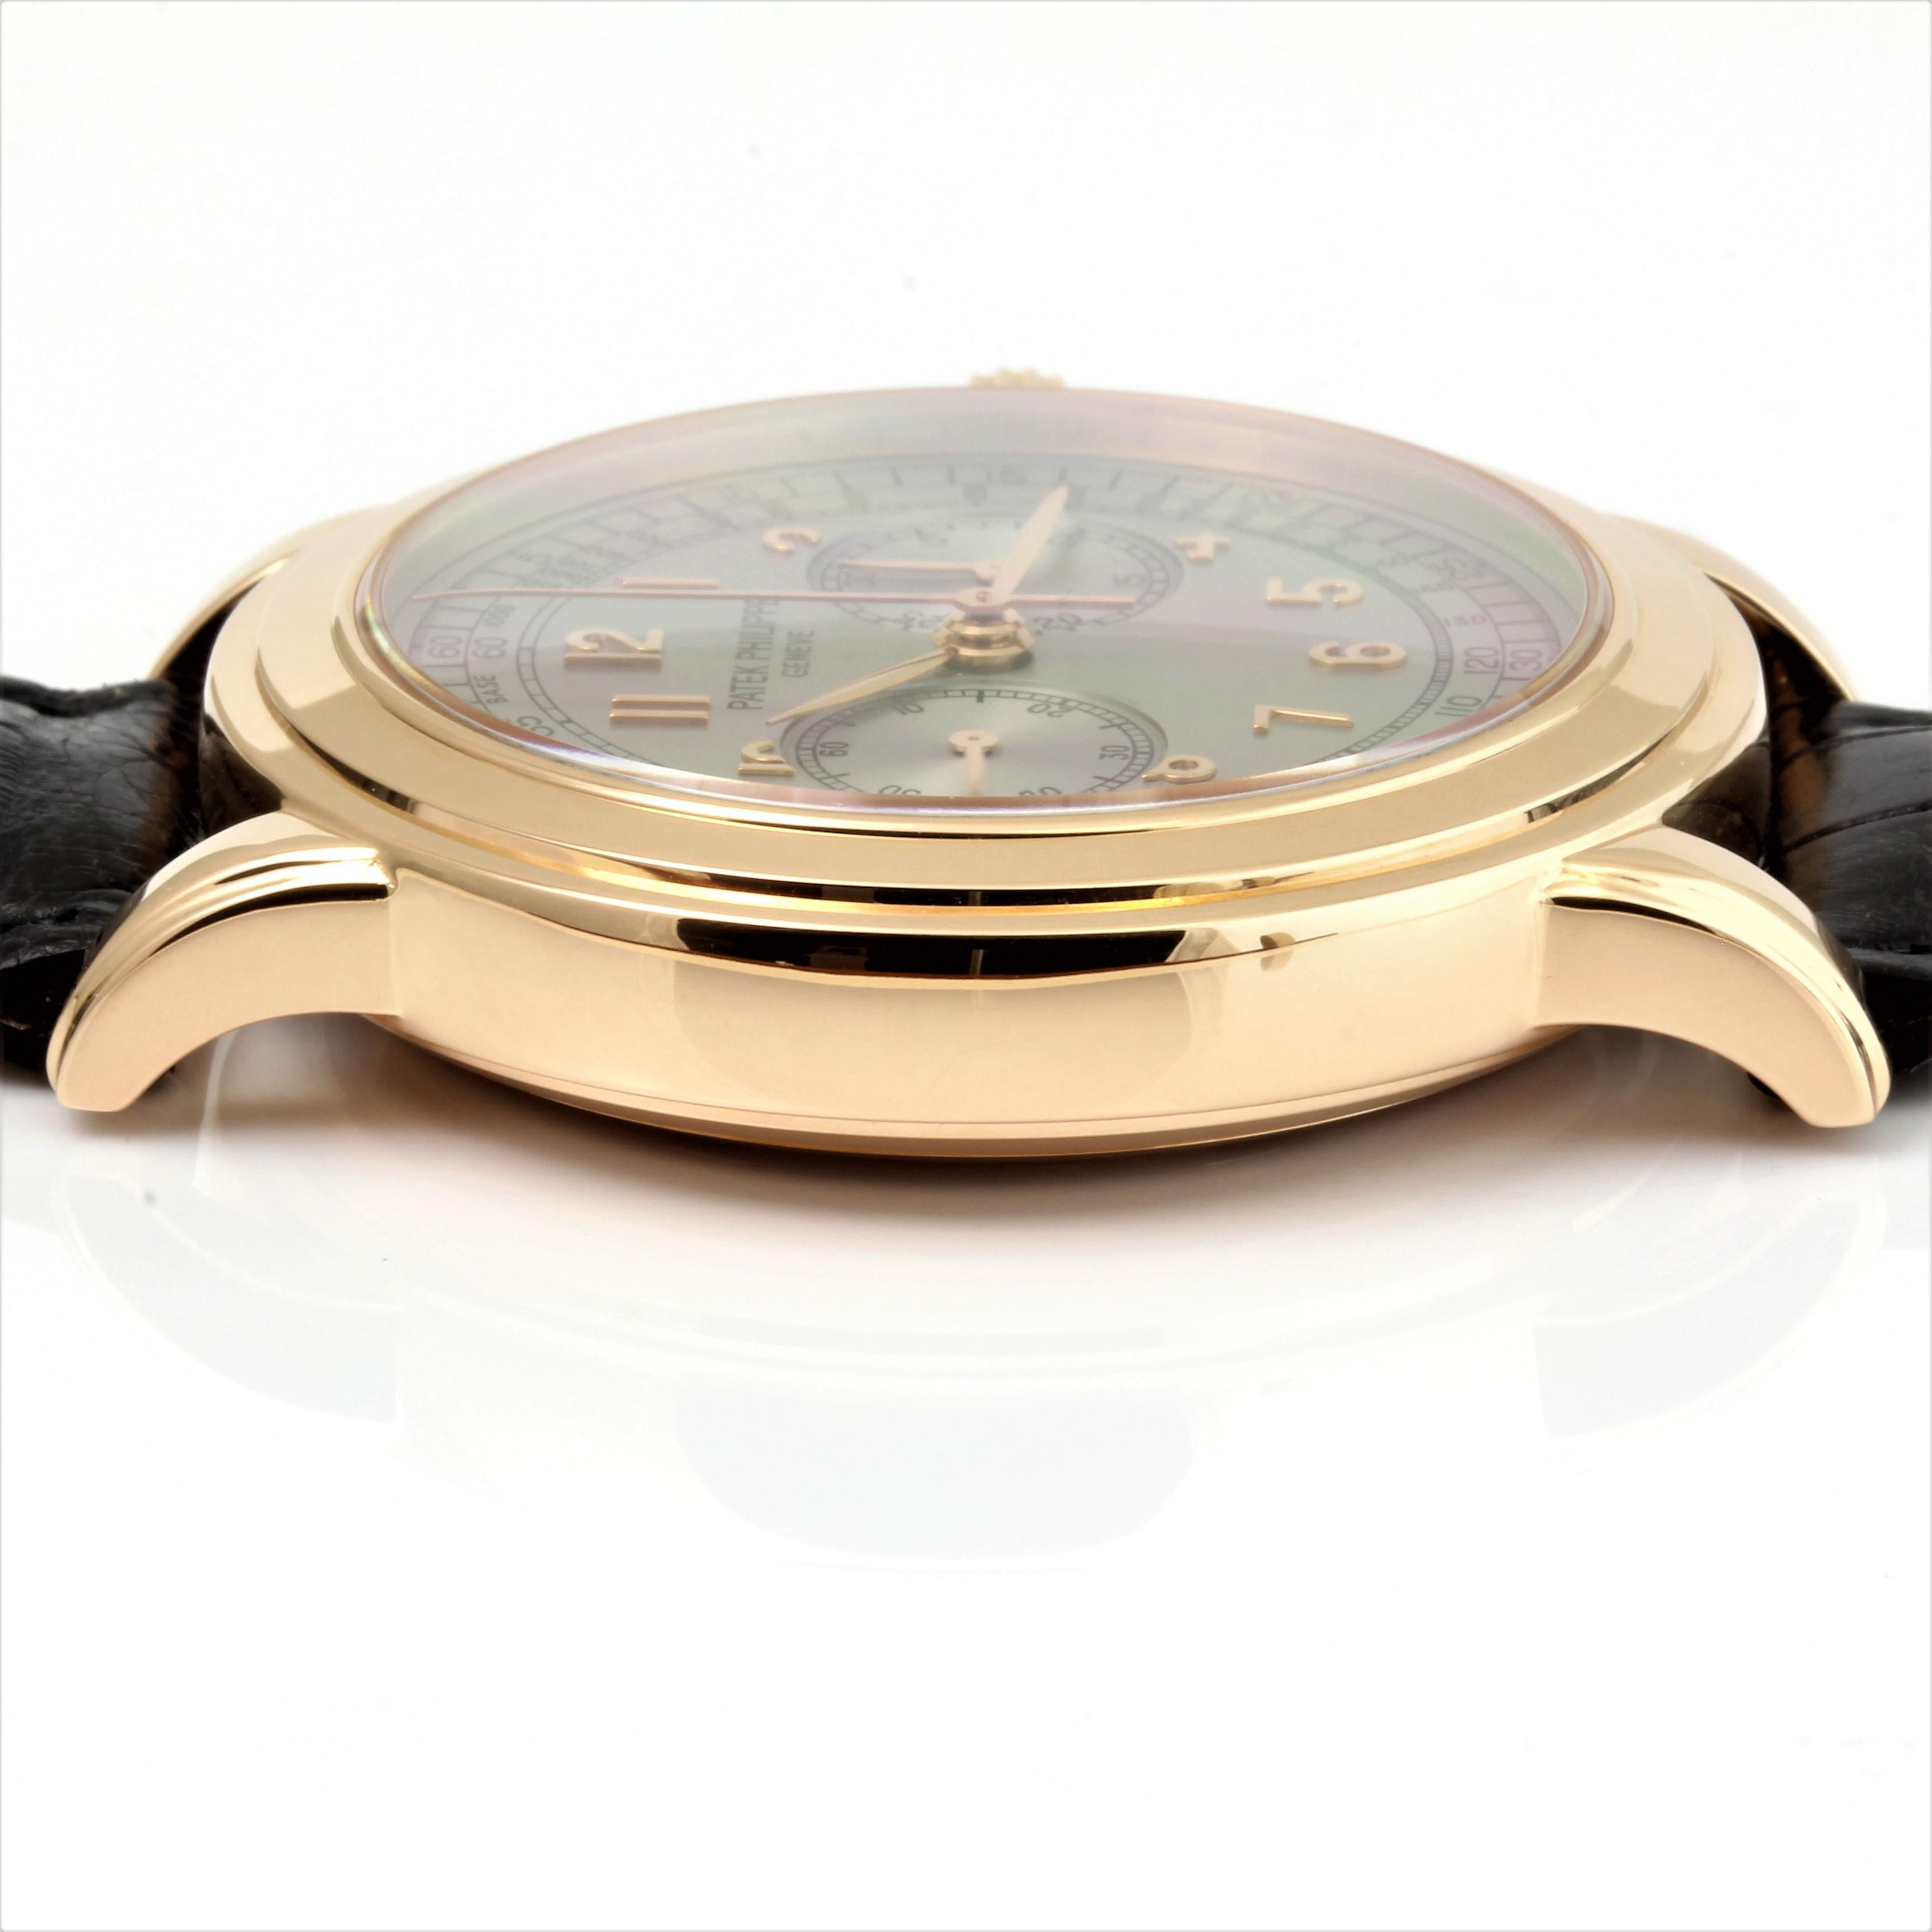 Modern Patek Philippe 5070R- Rose Gold Chronograph Watch, Case, circa 2004